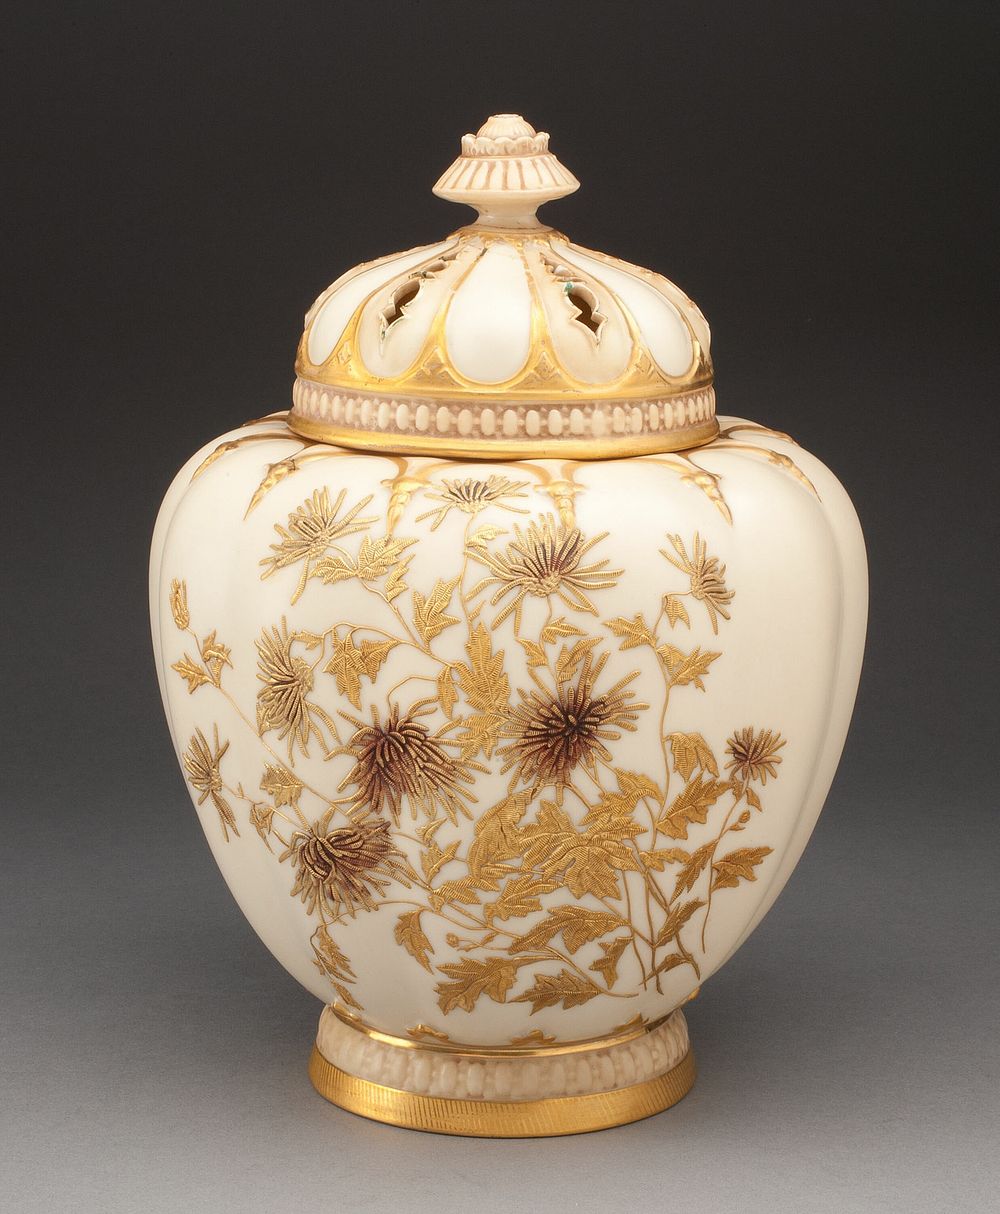 Potpourri Vase by Worcester Porcelain Factory (Manufacturer)